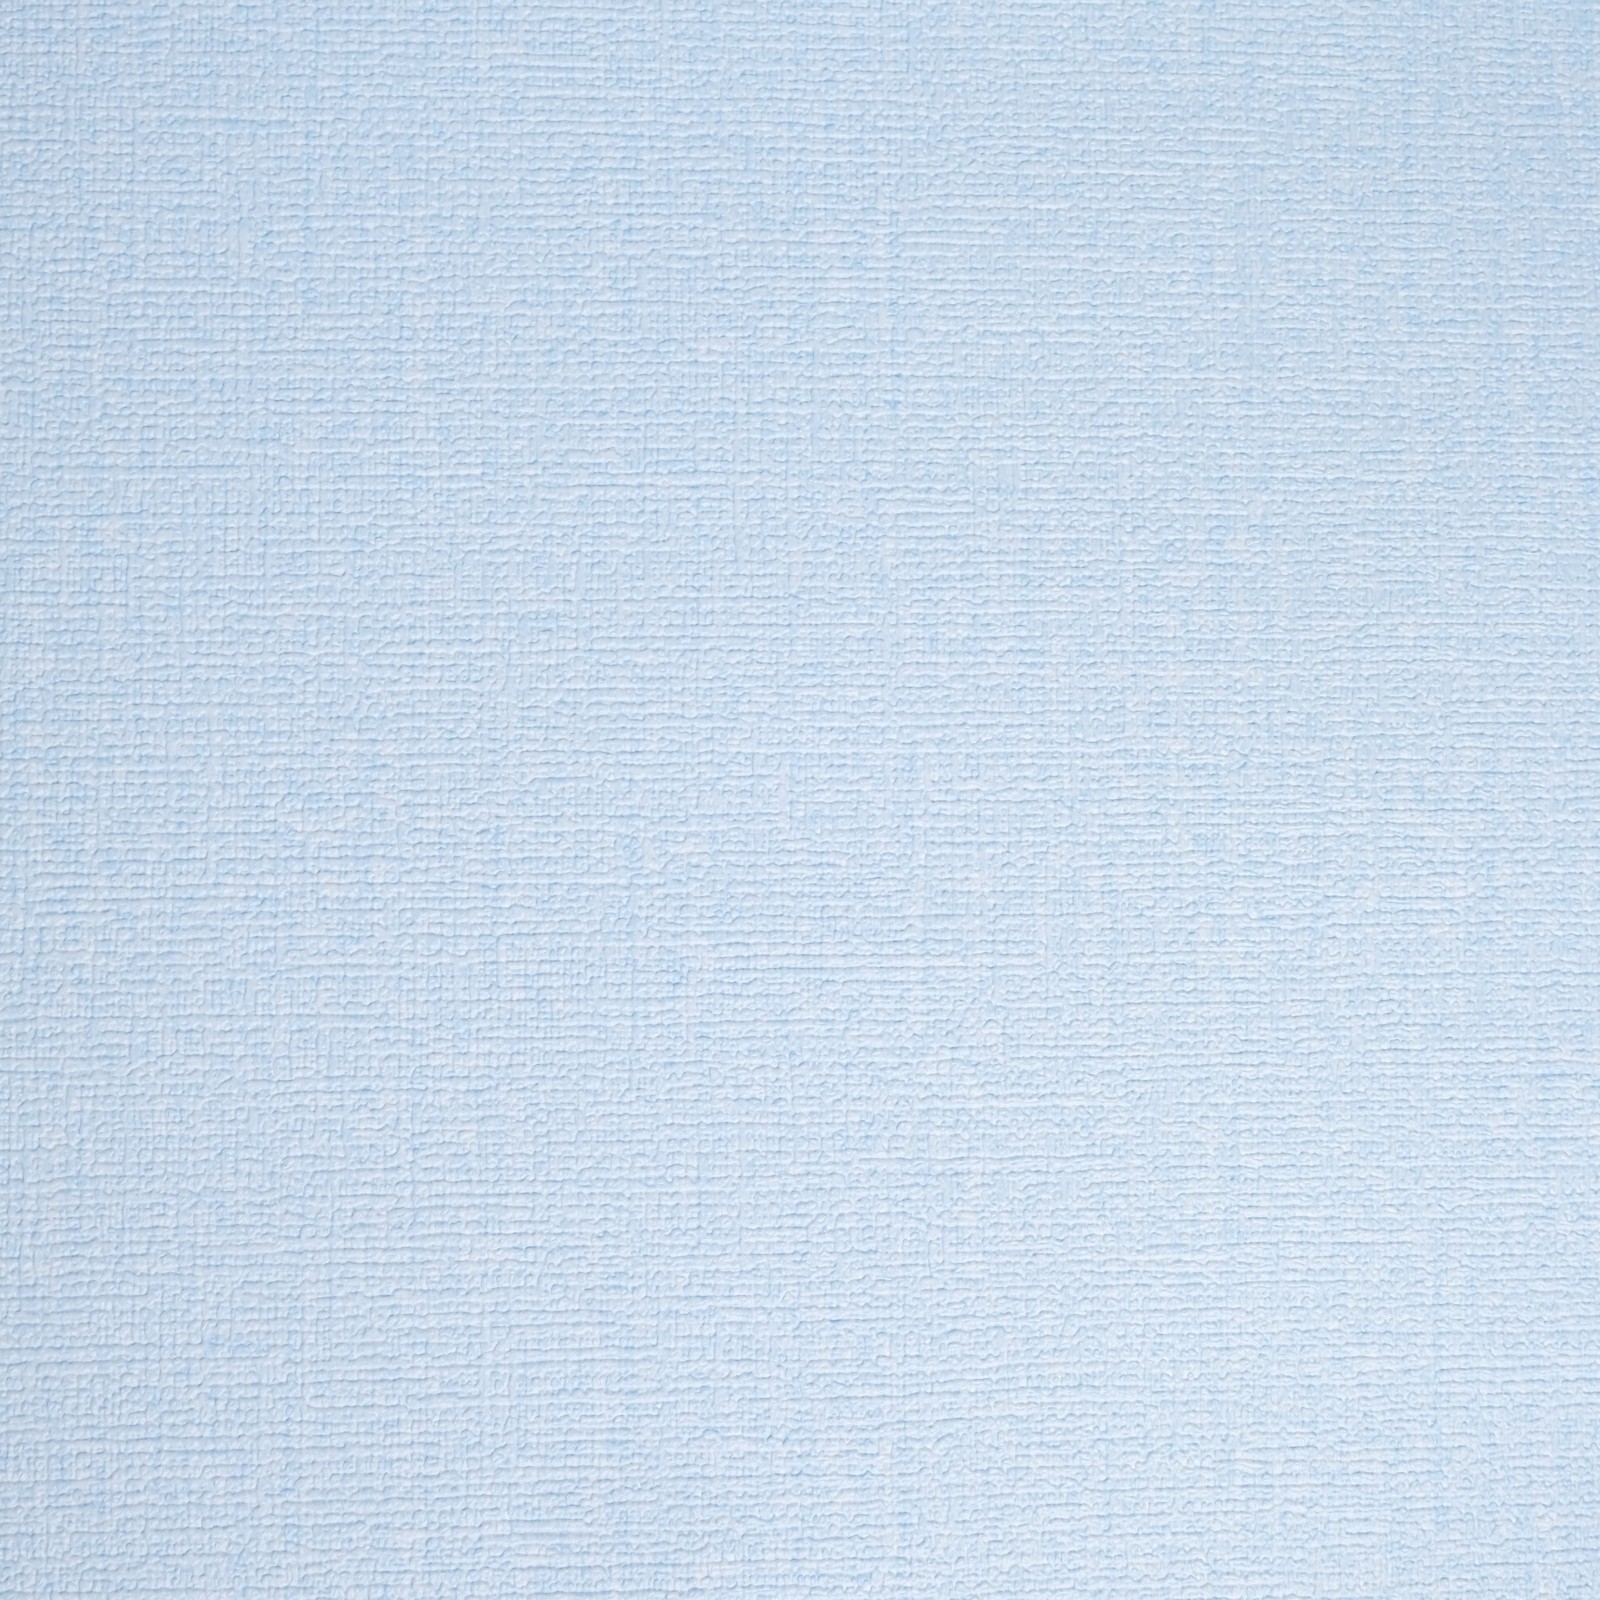 панель пвх самоклеящаяся в рулоне бледно зеленая 2 8м 50см толщ2мм Панель ПВХ самоклеящаяся в рулоне голубая, 2,8м, 50см, толщ2мм